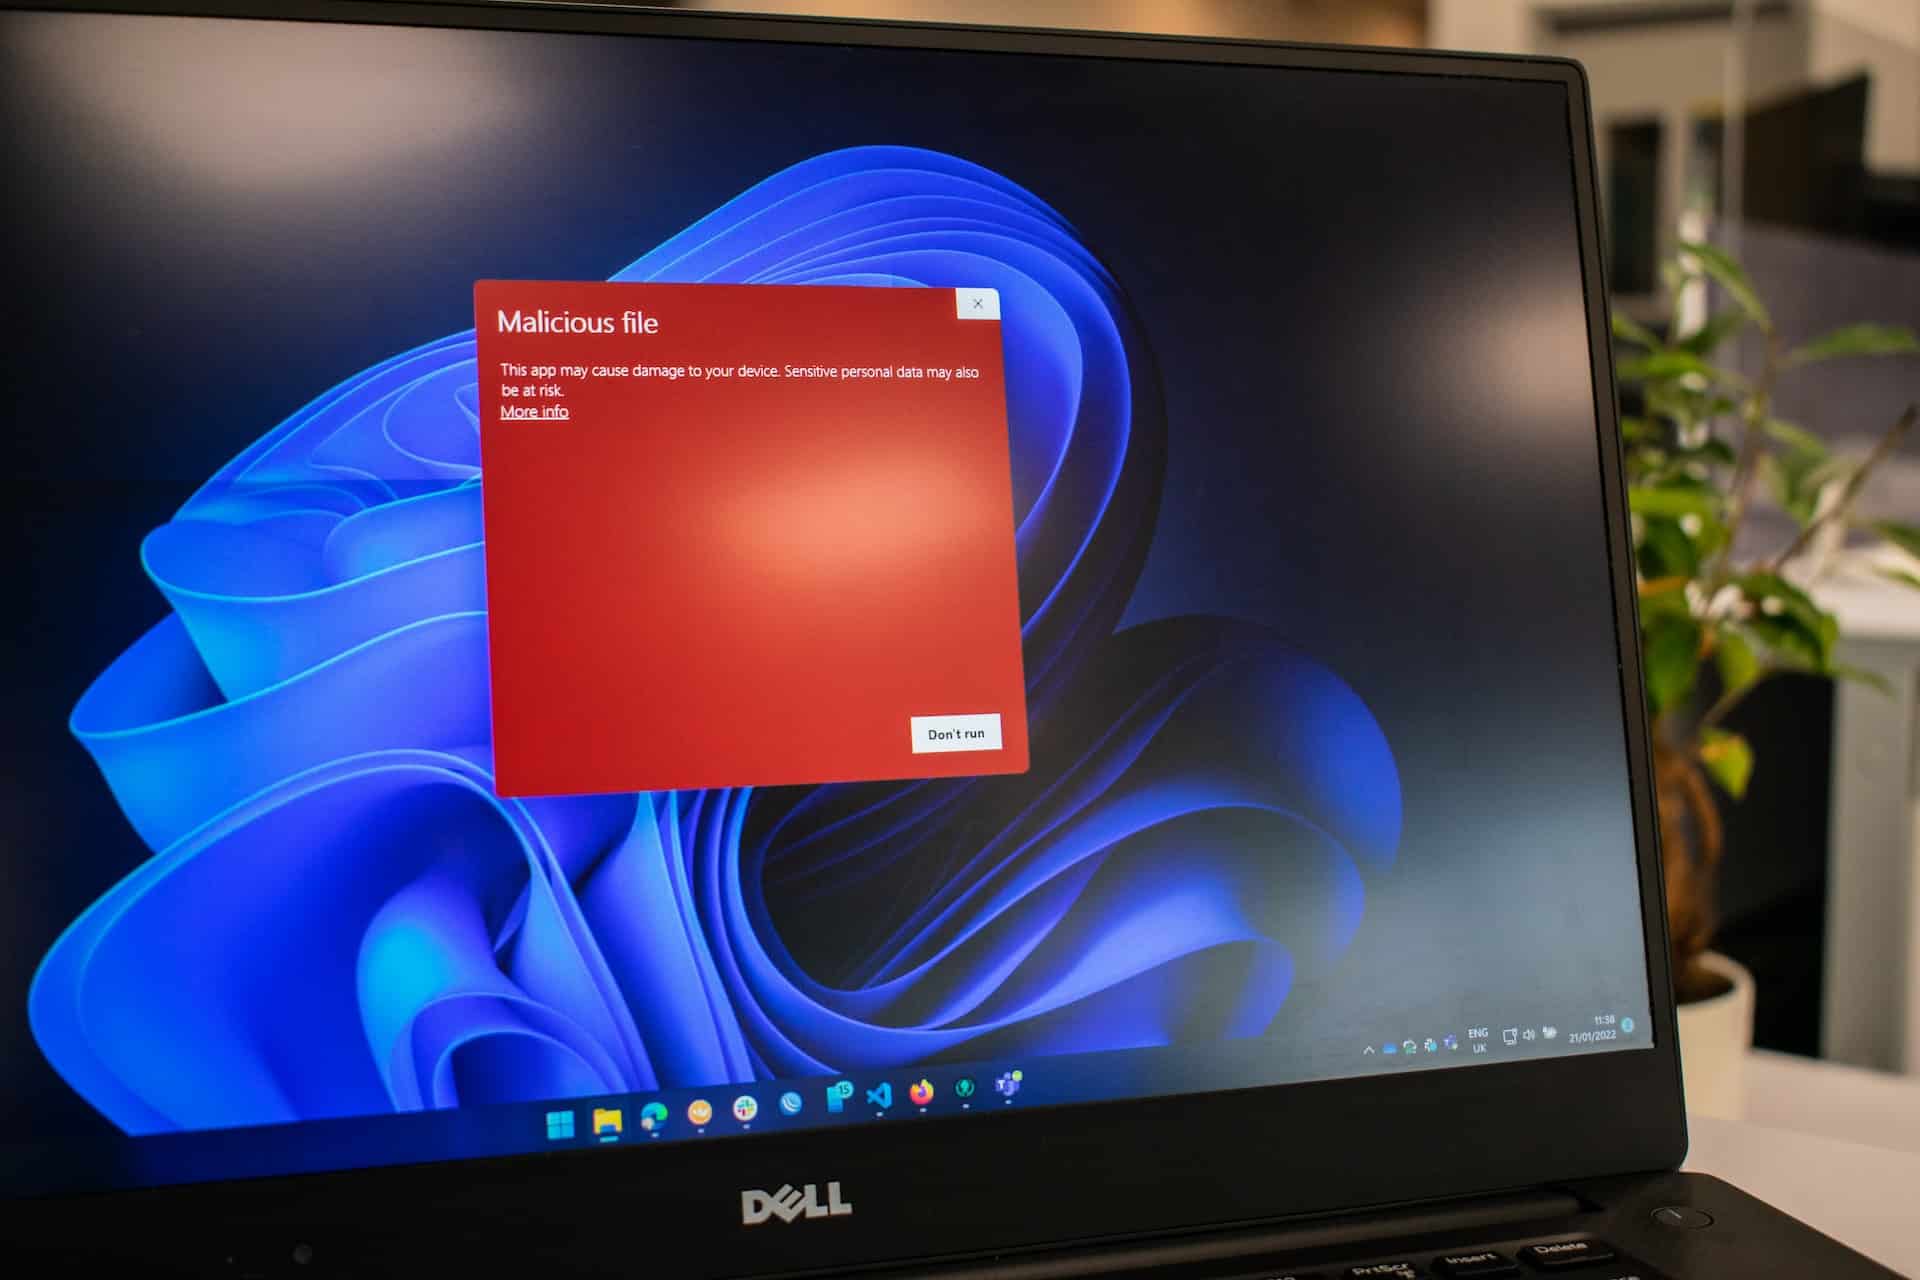 Laptop showing malicious file